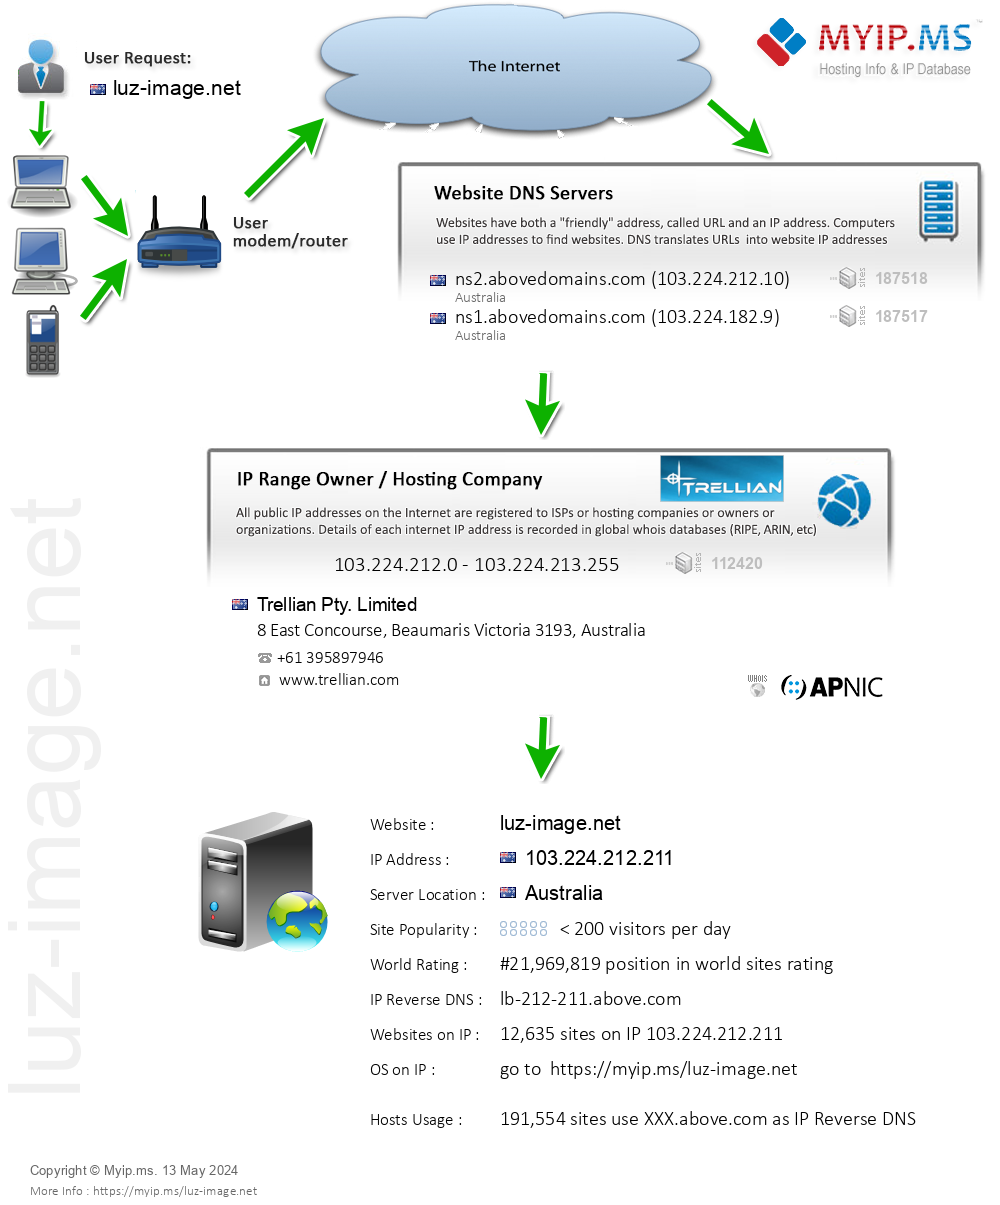 Luz-image.net - Website Hosting Visual IP Diagram